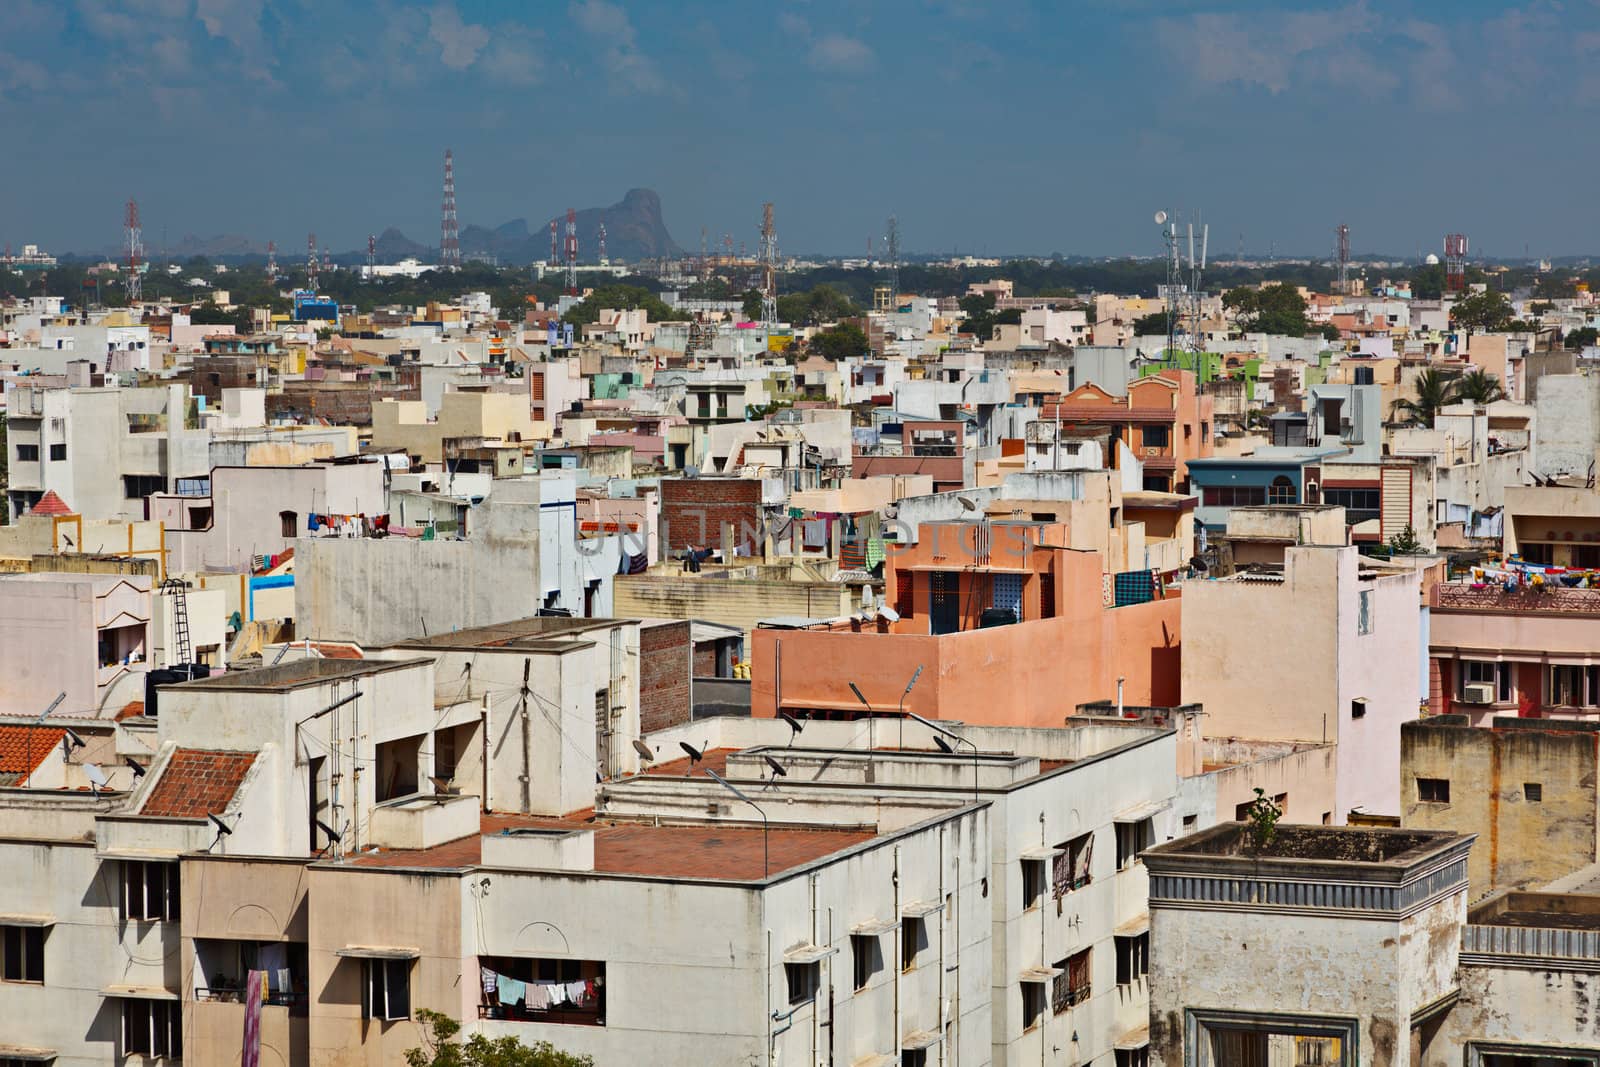 City Madurai, Tamil Nadu, India by dimol